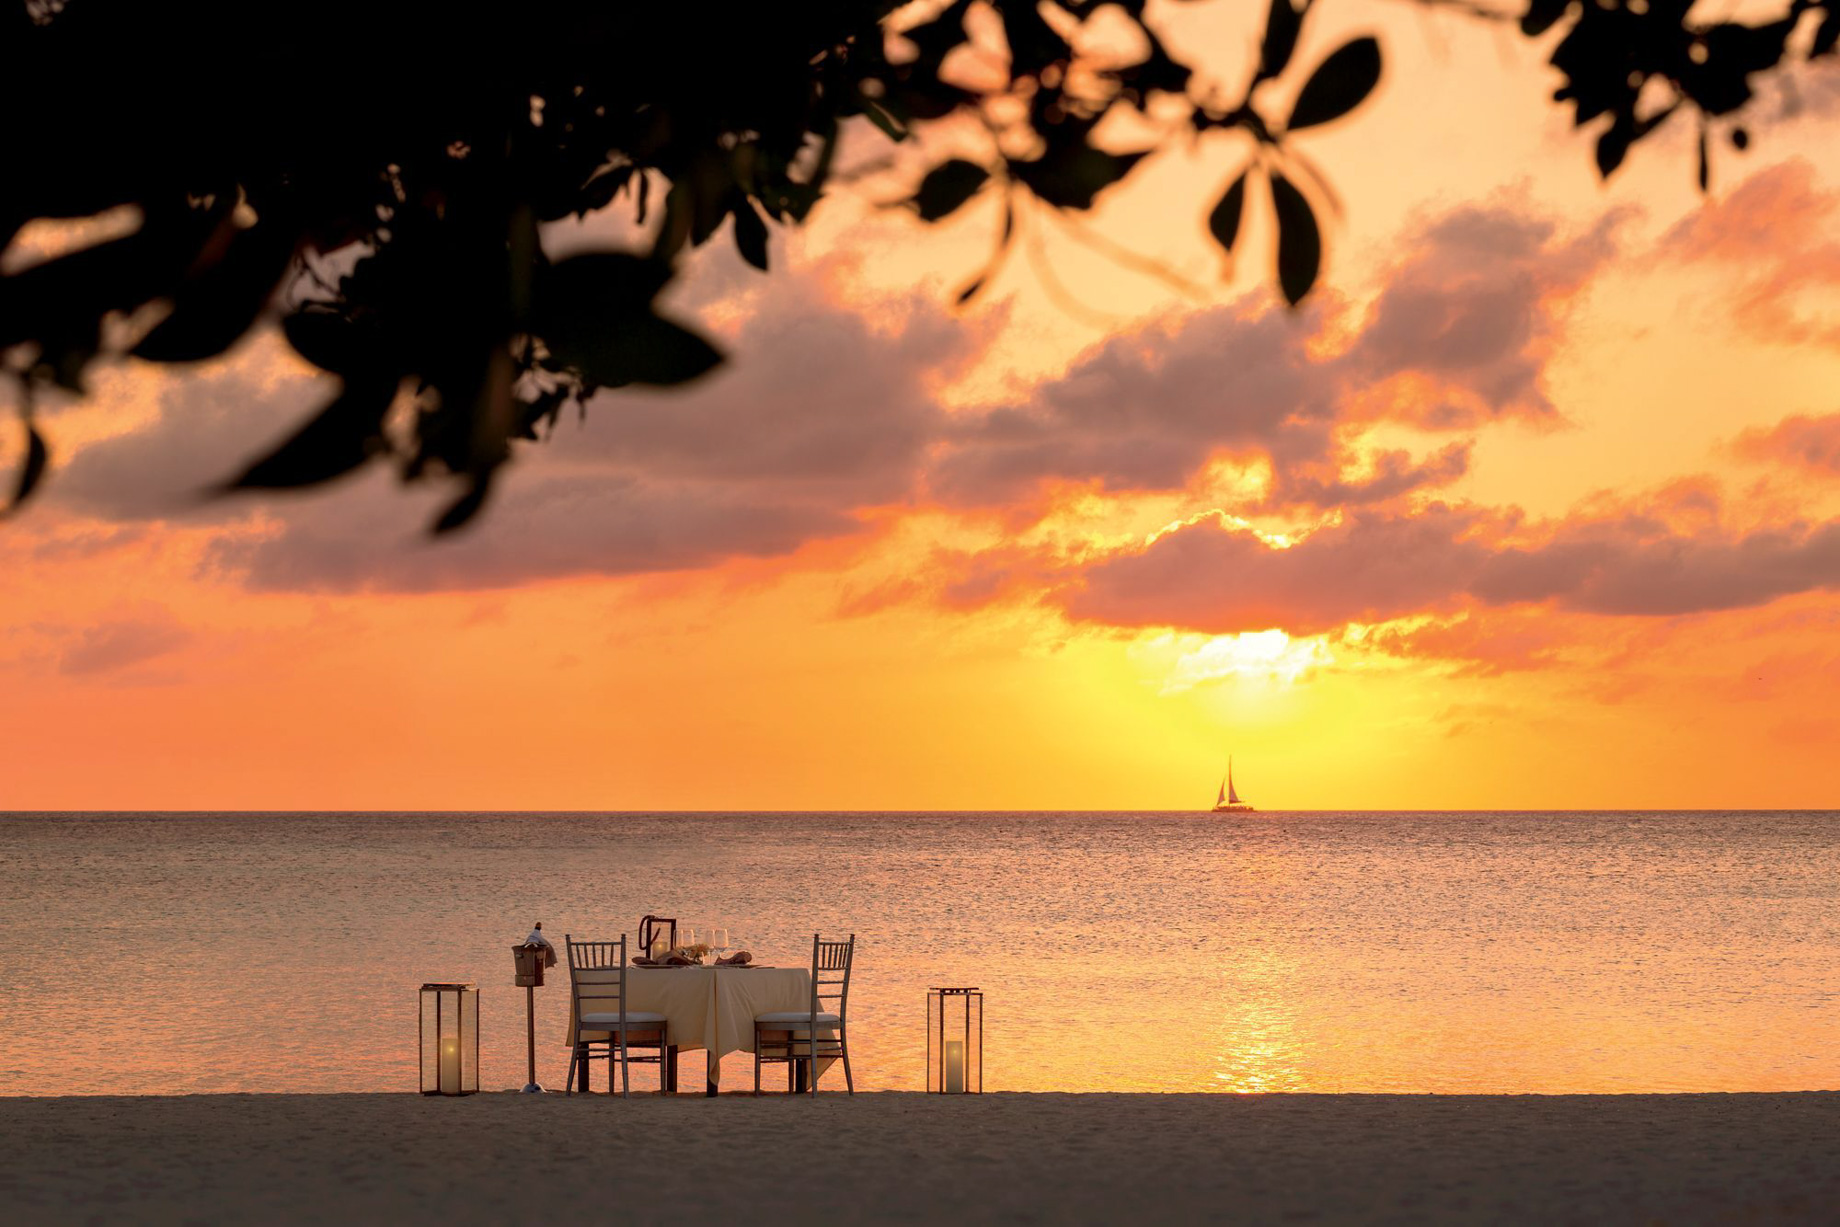 The Ritz-Carlton, Aruba Resort – Palm Beach, Aruba – Beach Dining Sunset